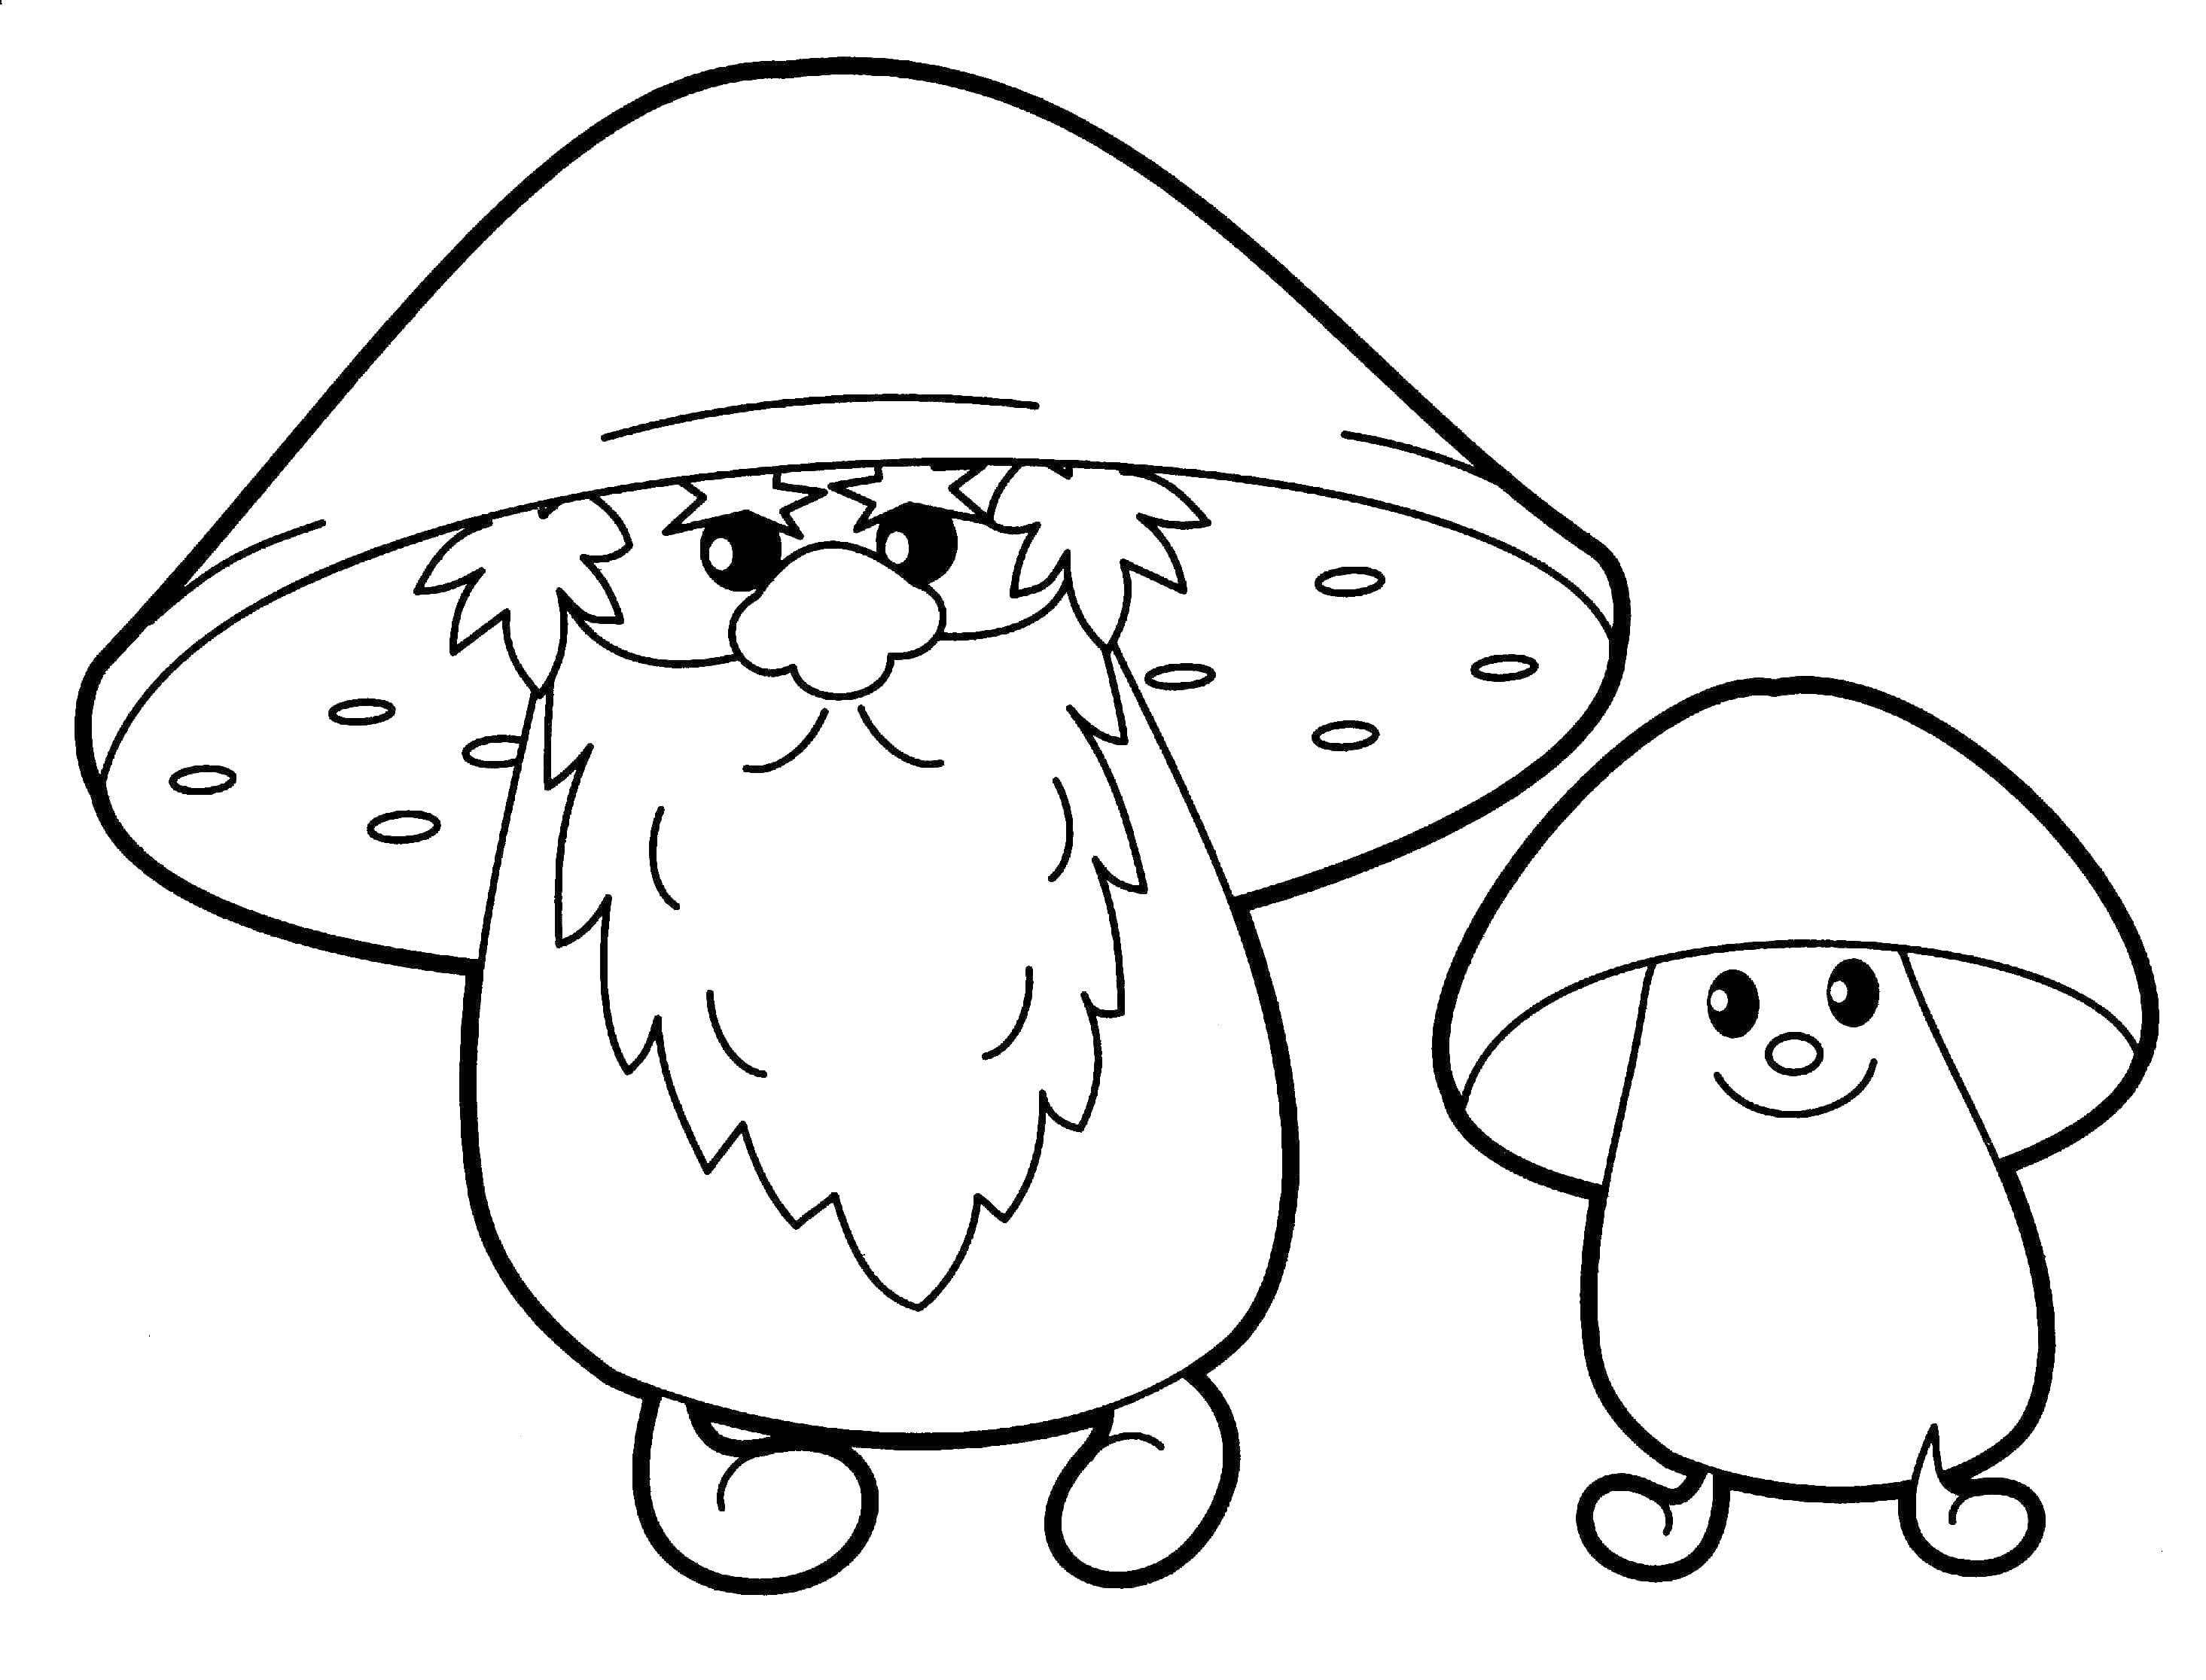 Coloring Two mushrooms. Category mushrooms. Tags:  mushrooms, food, two.